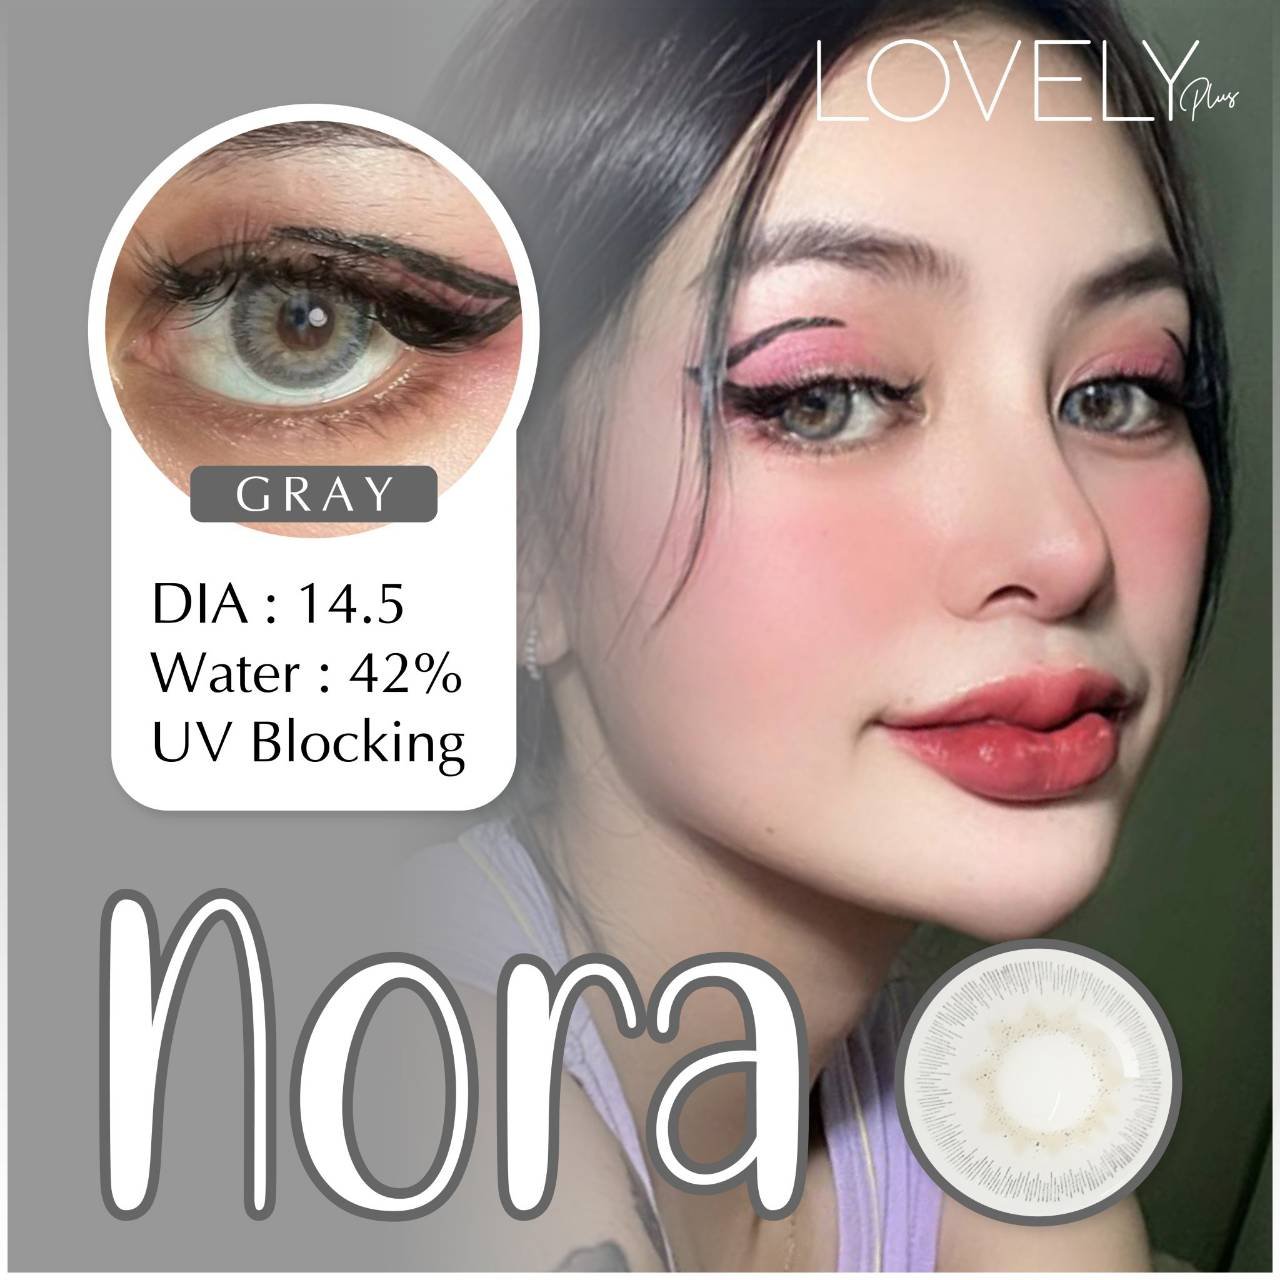 Nora gray